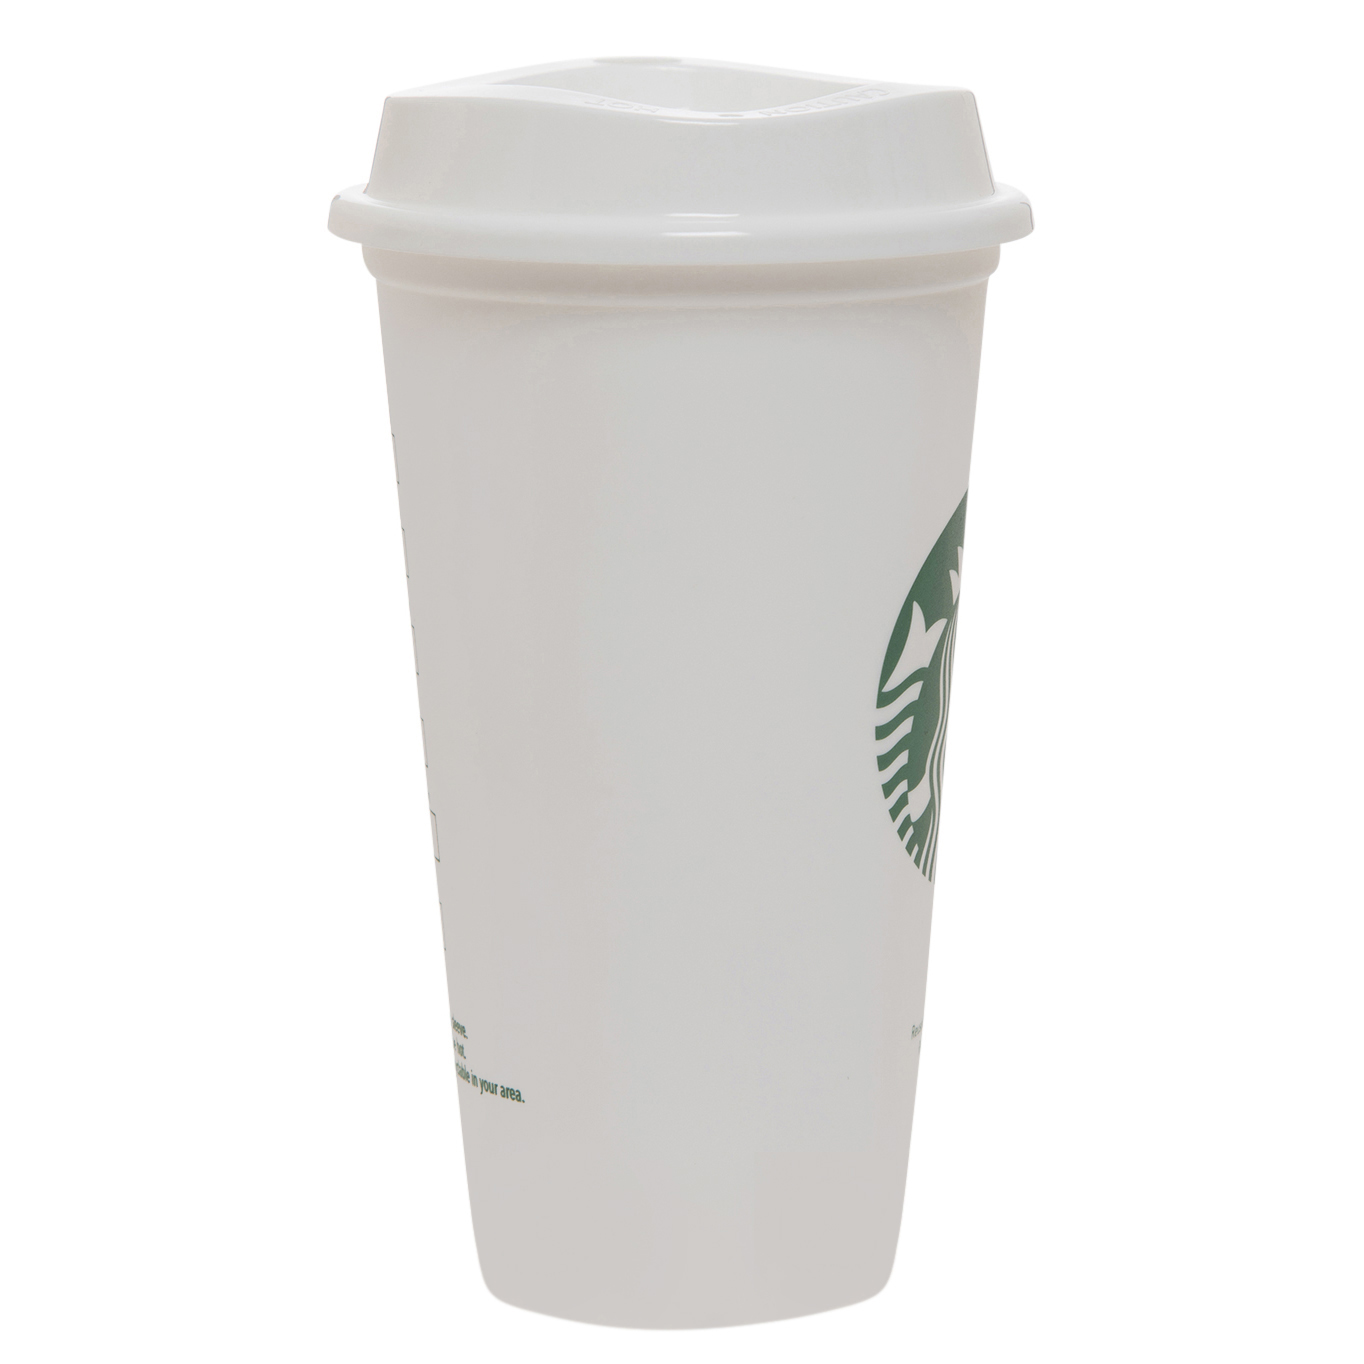 Starbucks 16oz Reusable Cups 5-Pack White - image 3 of 7